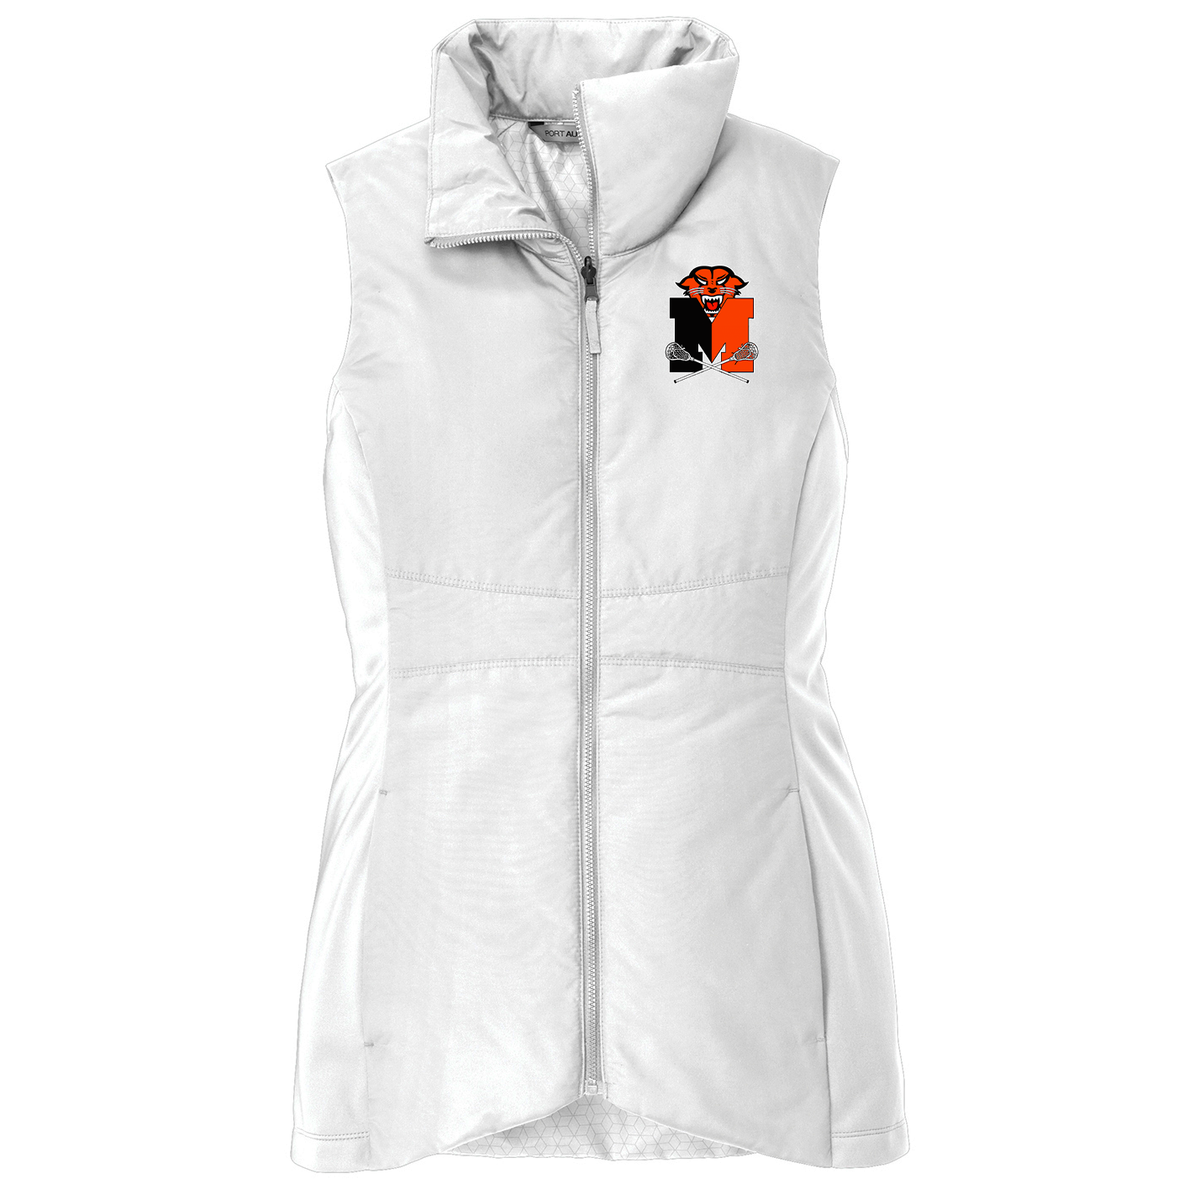 Monroe Lacrosse Women's White Vest